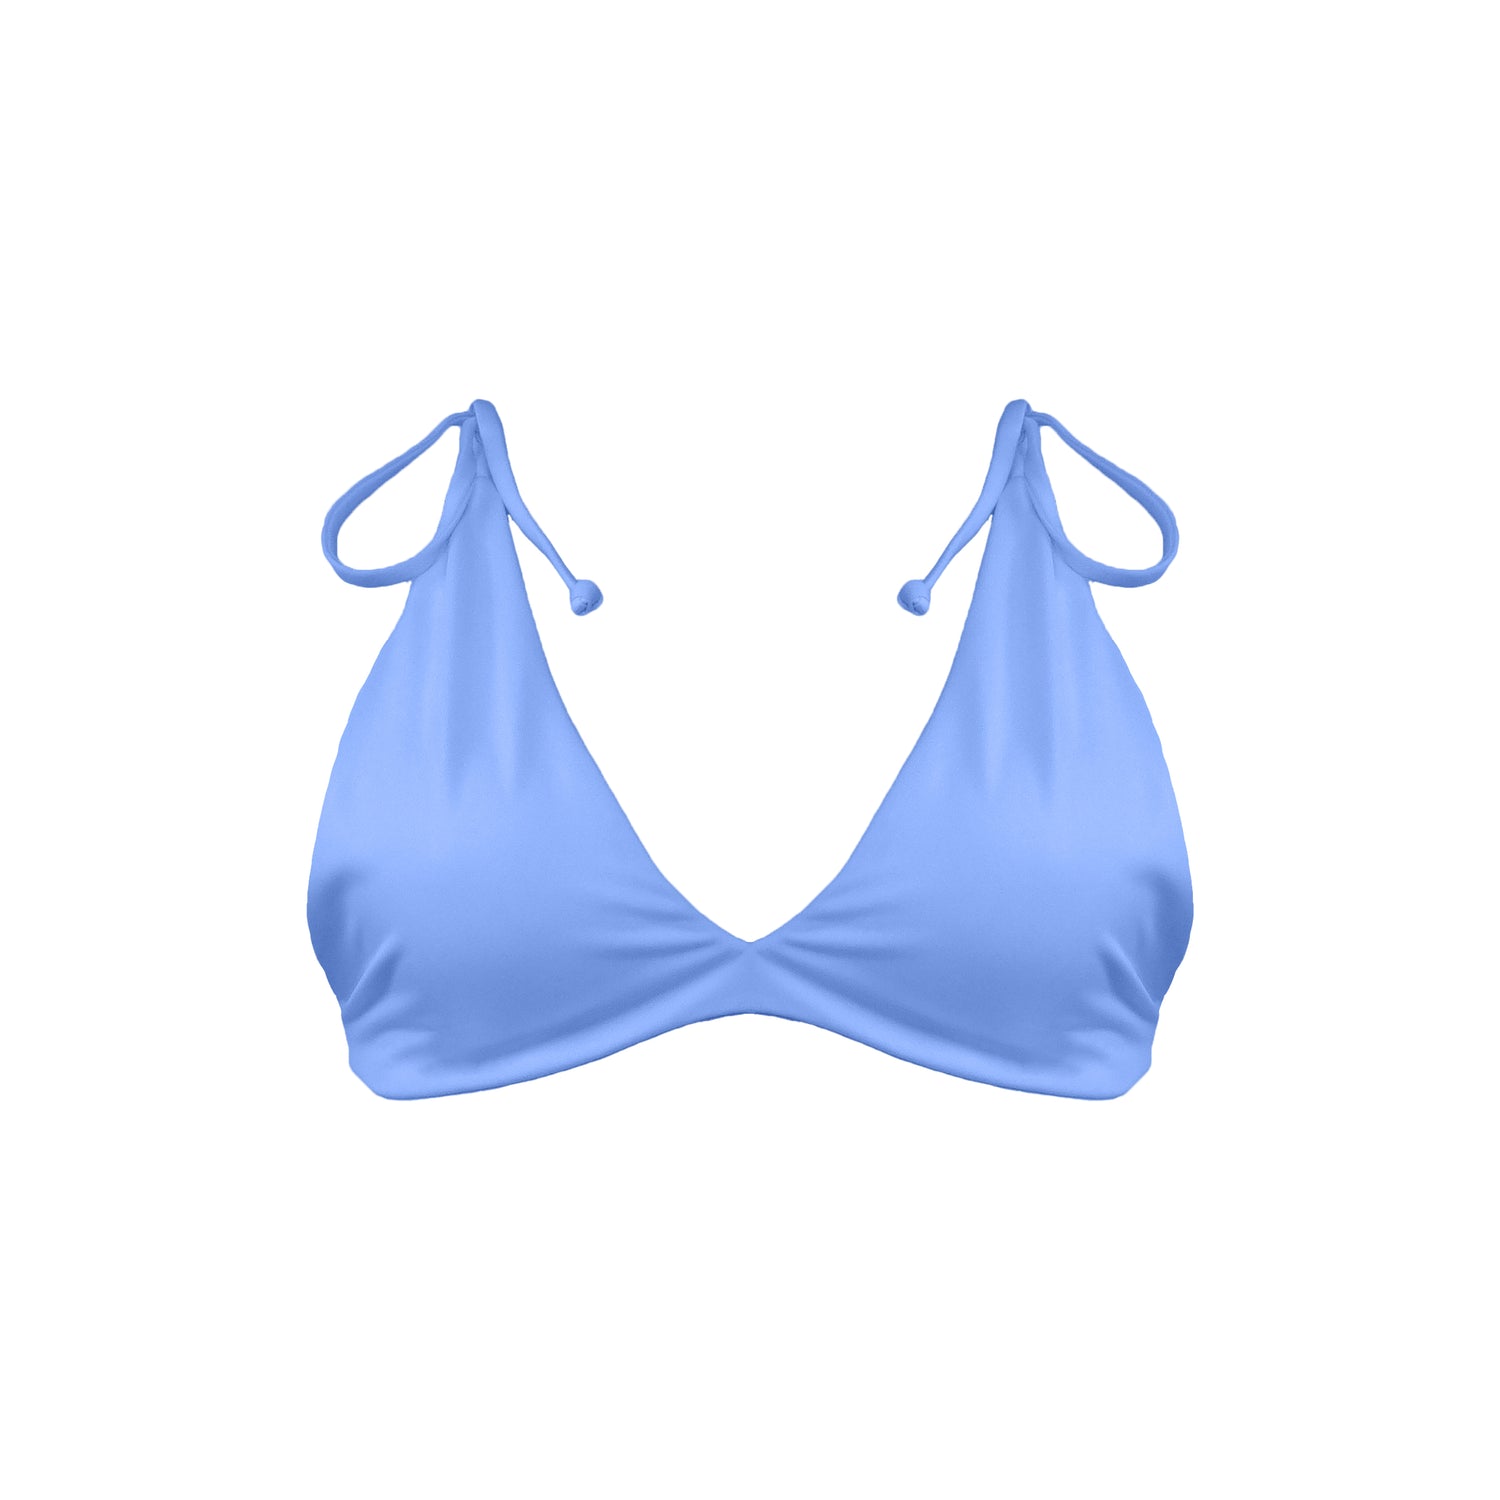 Periwinkle blue Capri bralette style bikini top with adjustable tie shoulder straps.